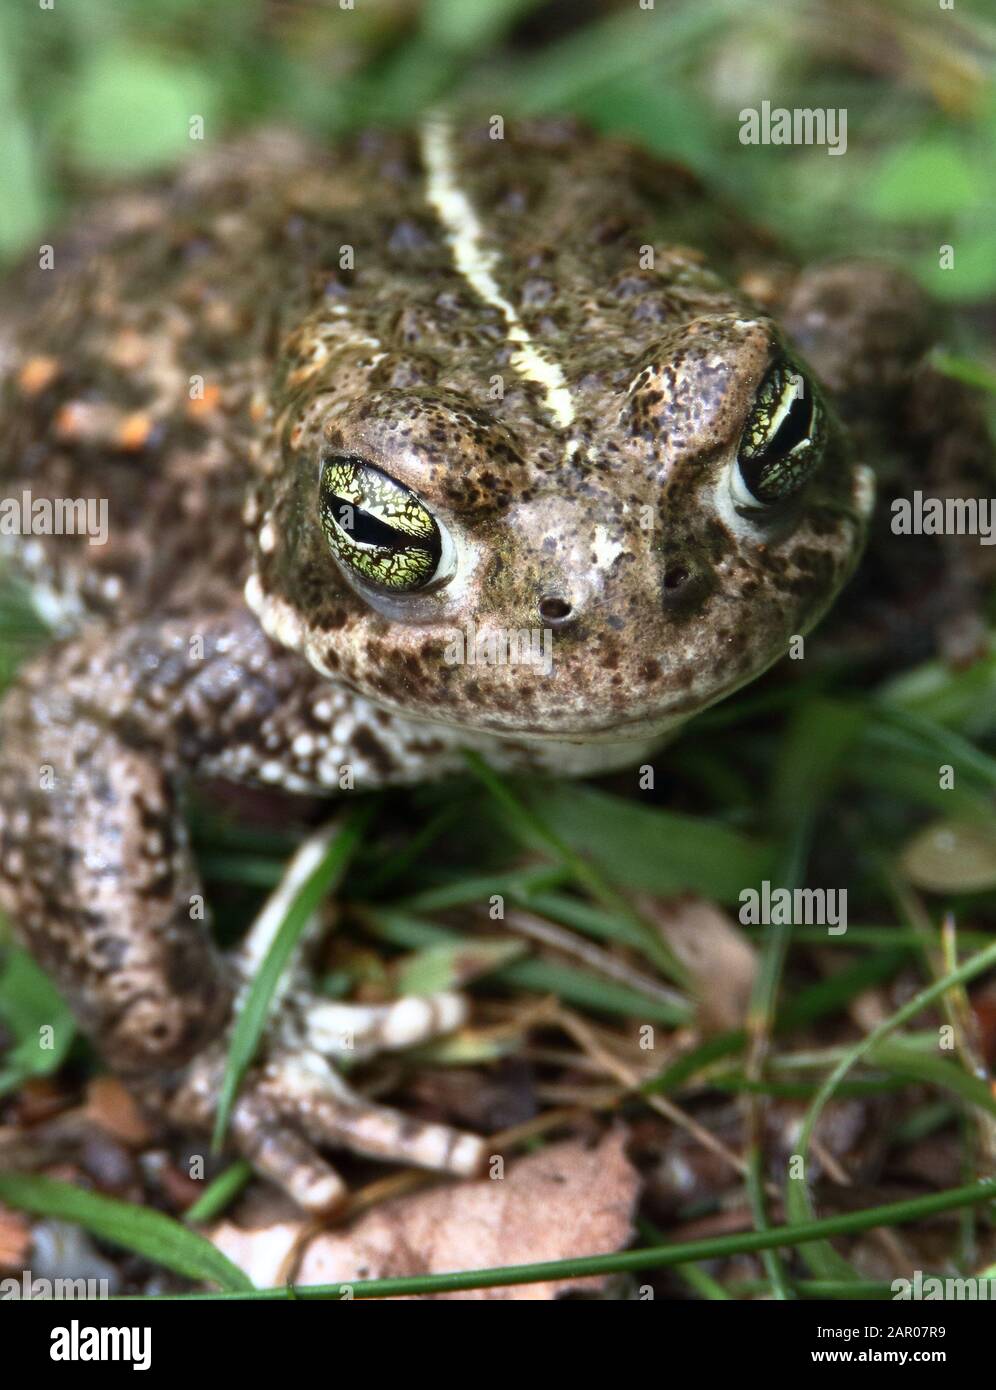 Natterjack toad, Epidalea calamita, head shot showing the distinctive green striped eyes, crawling on grass.  UK Stock Photo